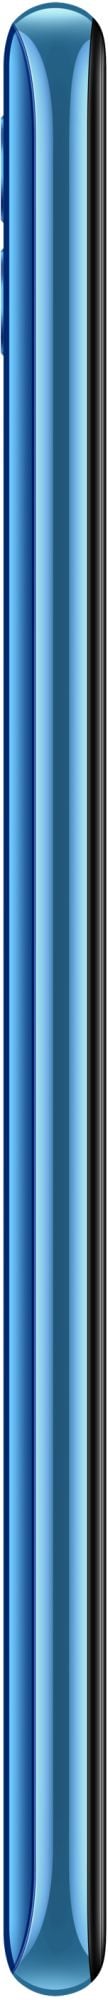 Huawei Honor 10 Lite 64GB Blue